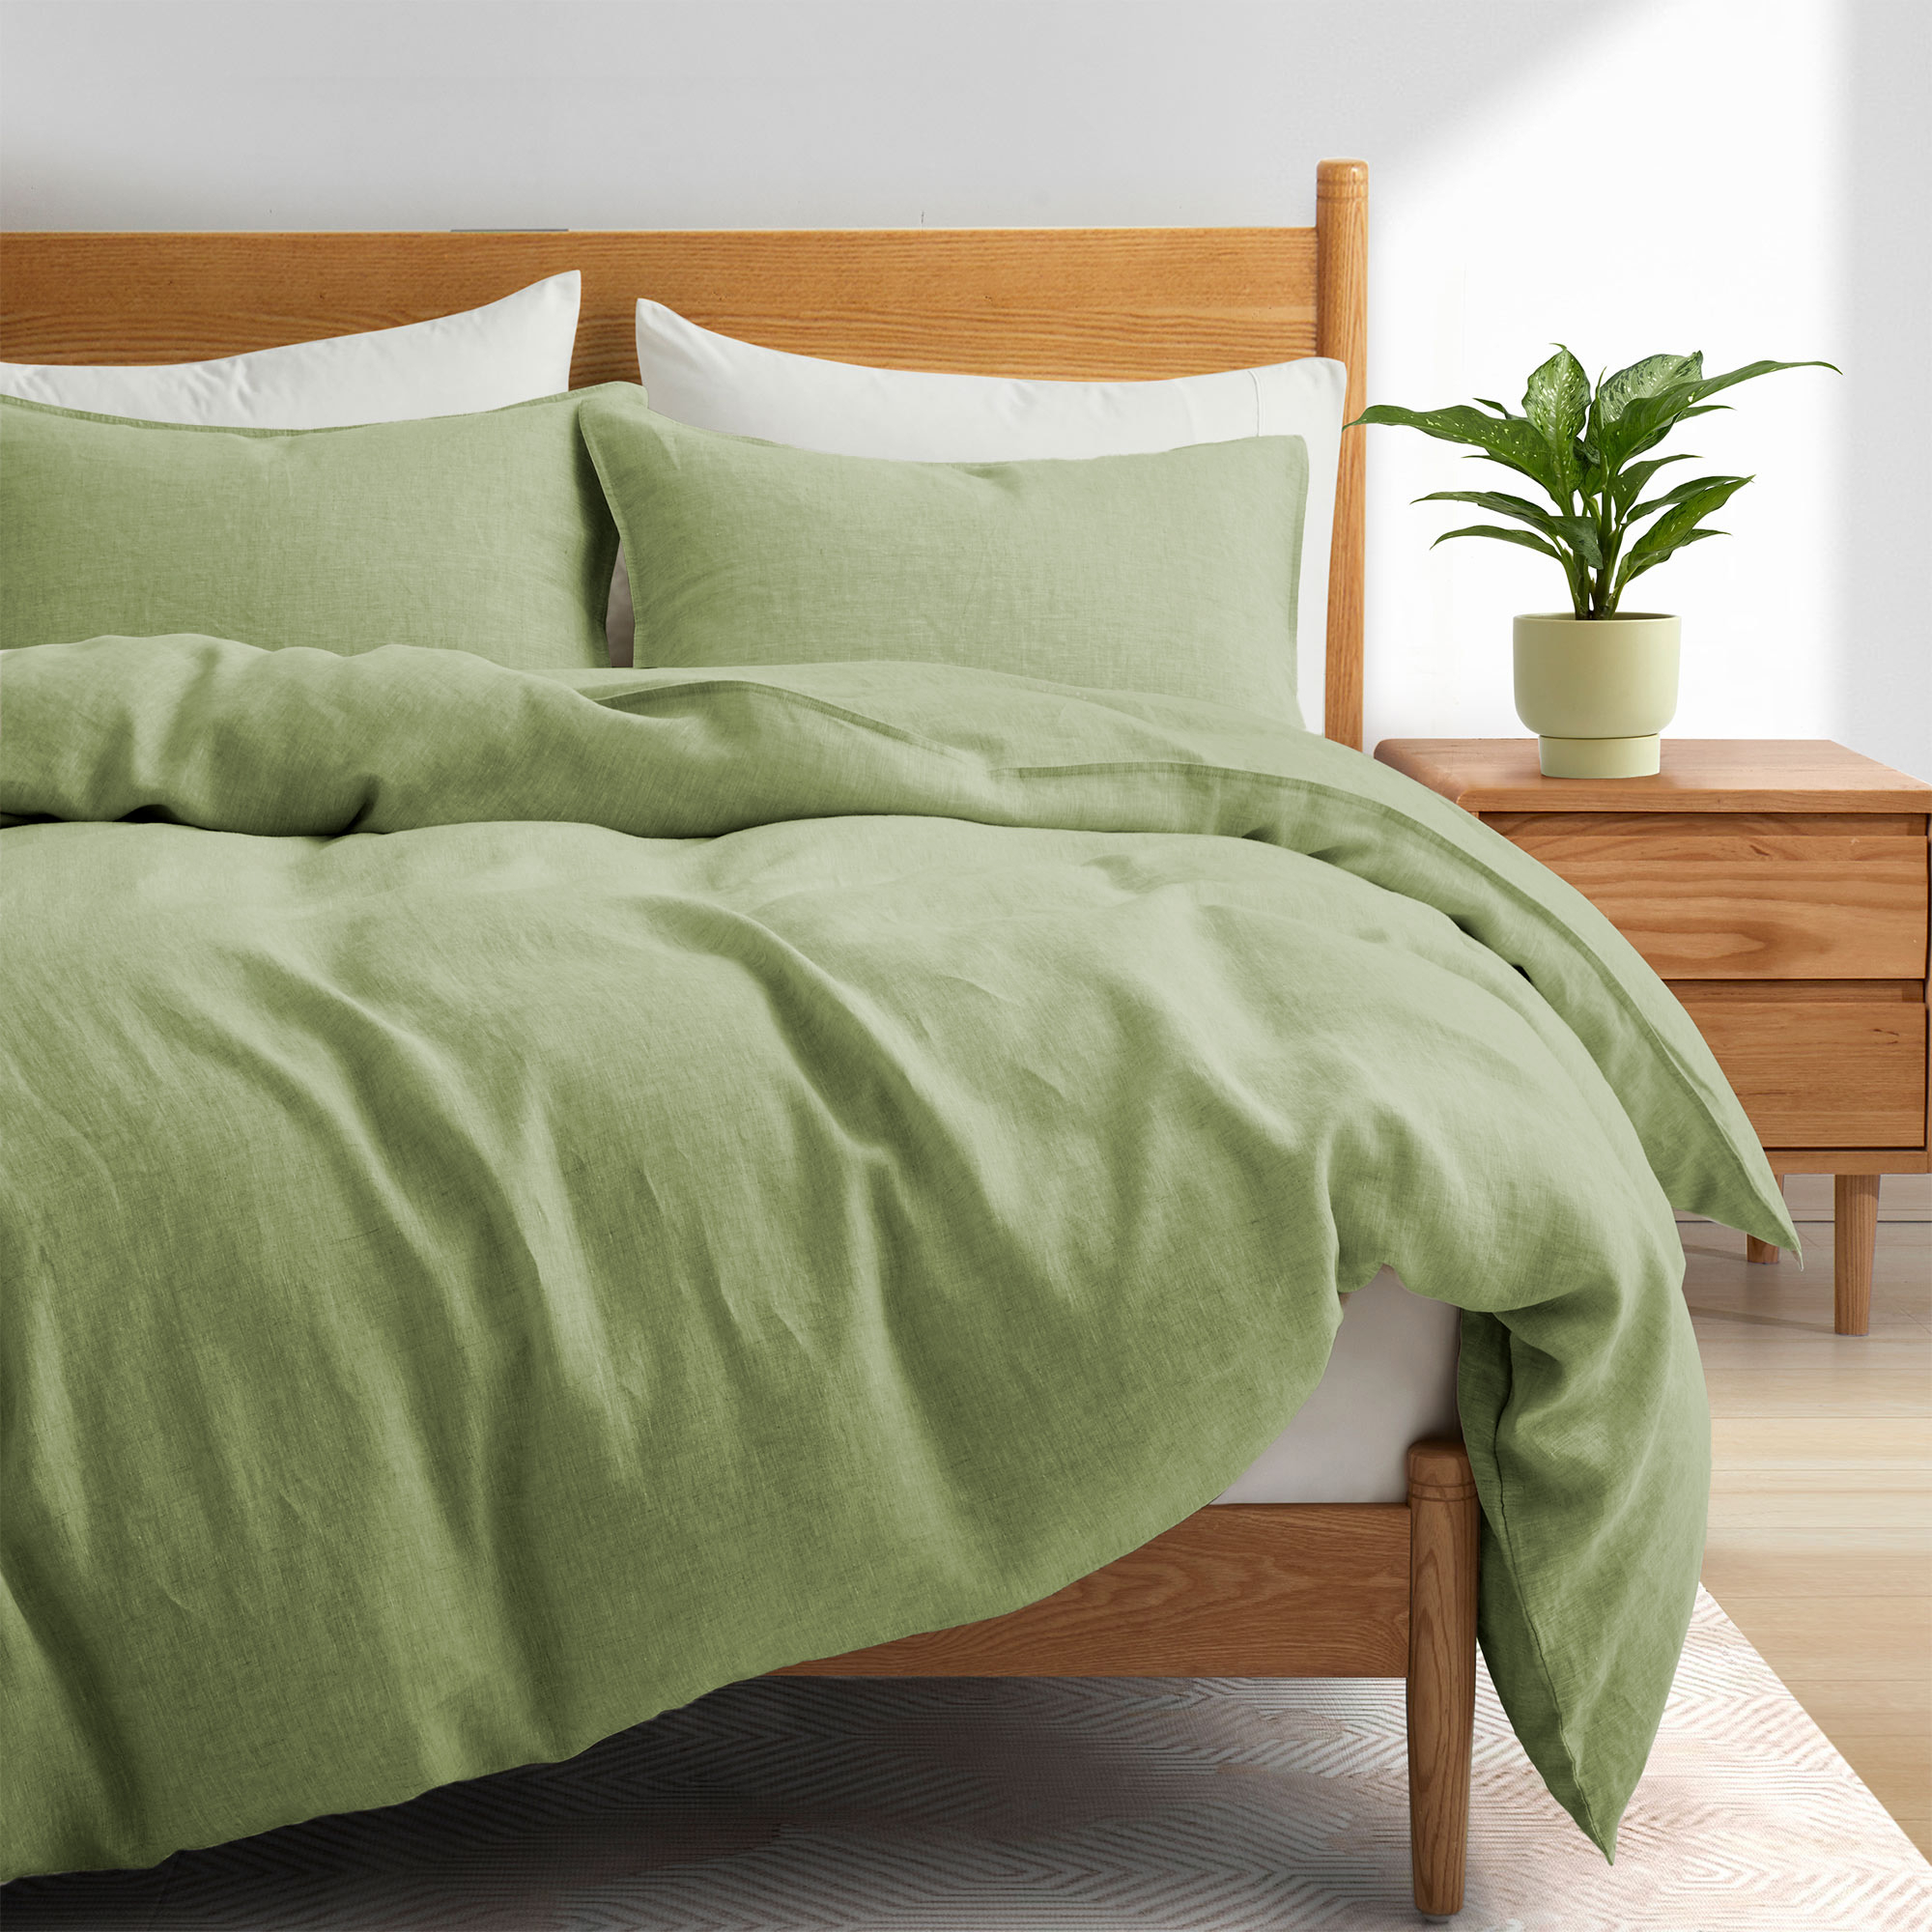 Premium Flax Linen Duvet Cover Set With Pillow Shams Breathable Moisture Wicking Bedding Set - Light Blue, King